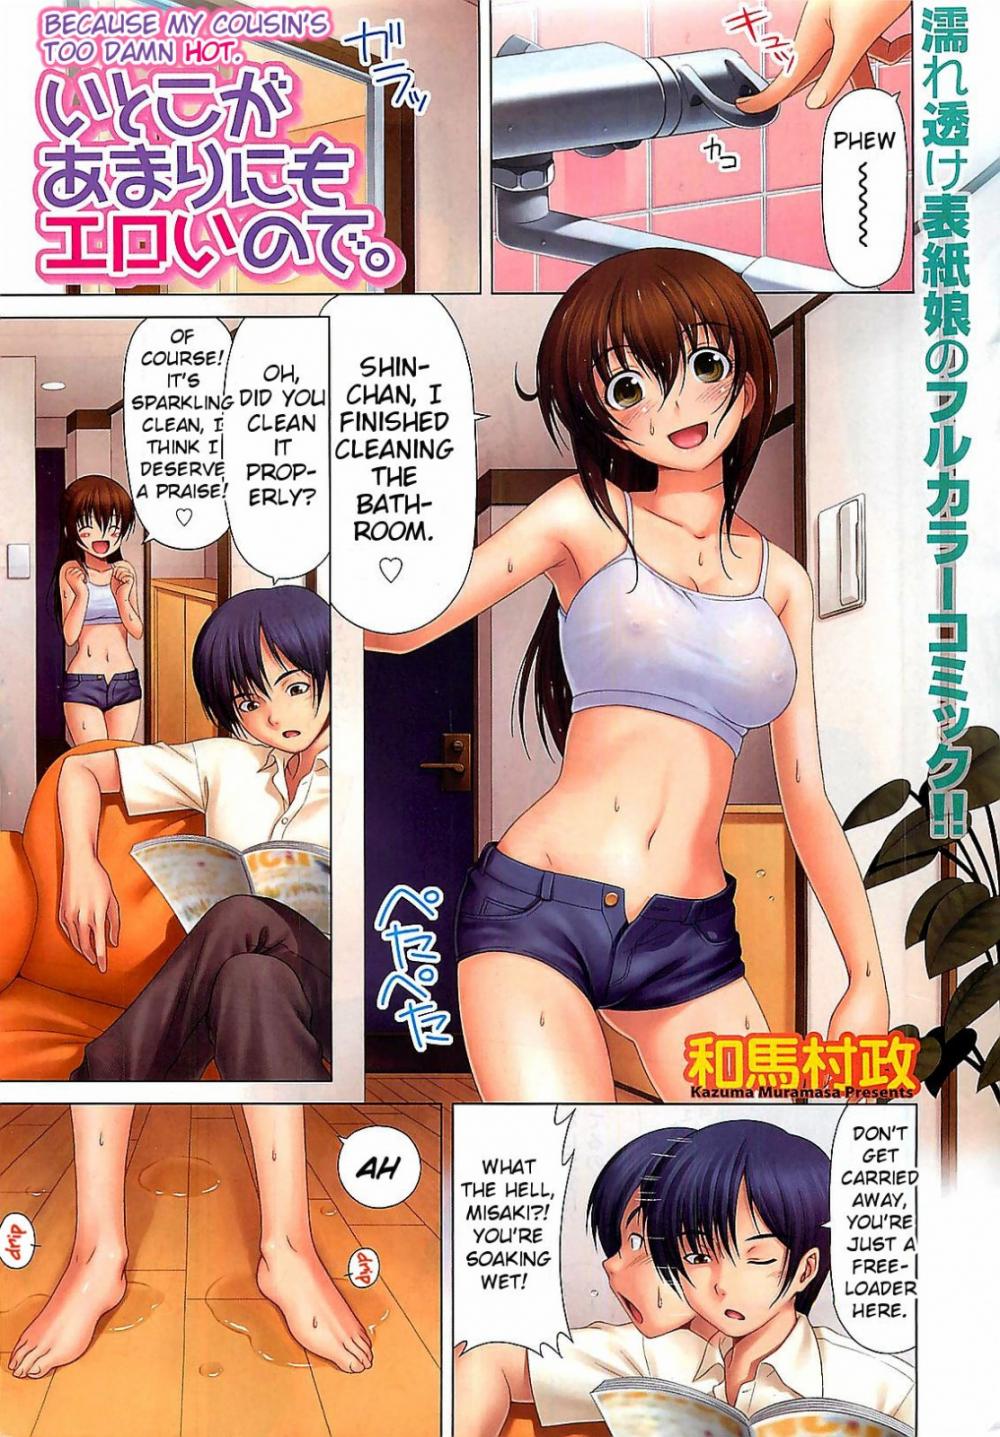 Hentai Manga Comic-Because My Cousin's Too Damn Hot-Read-1